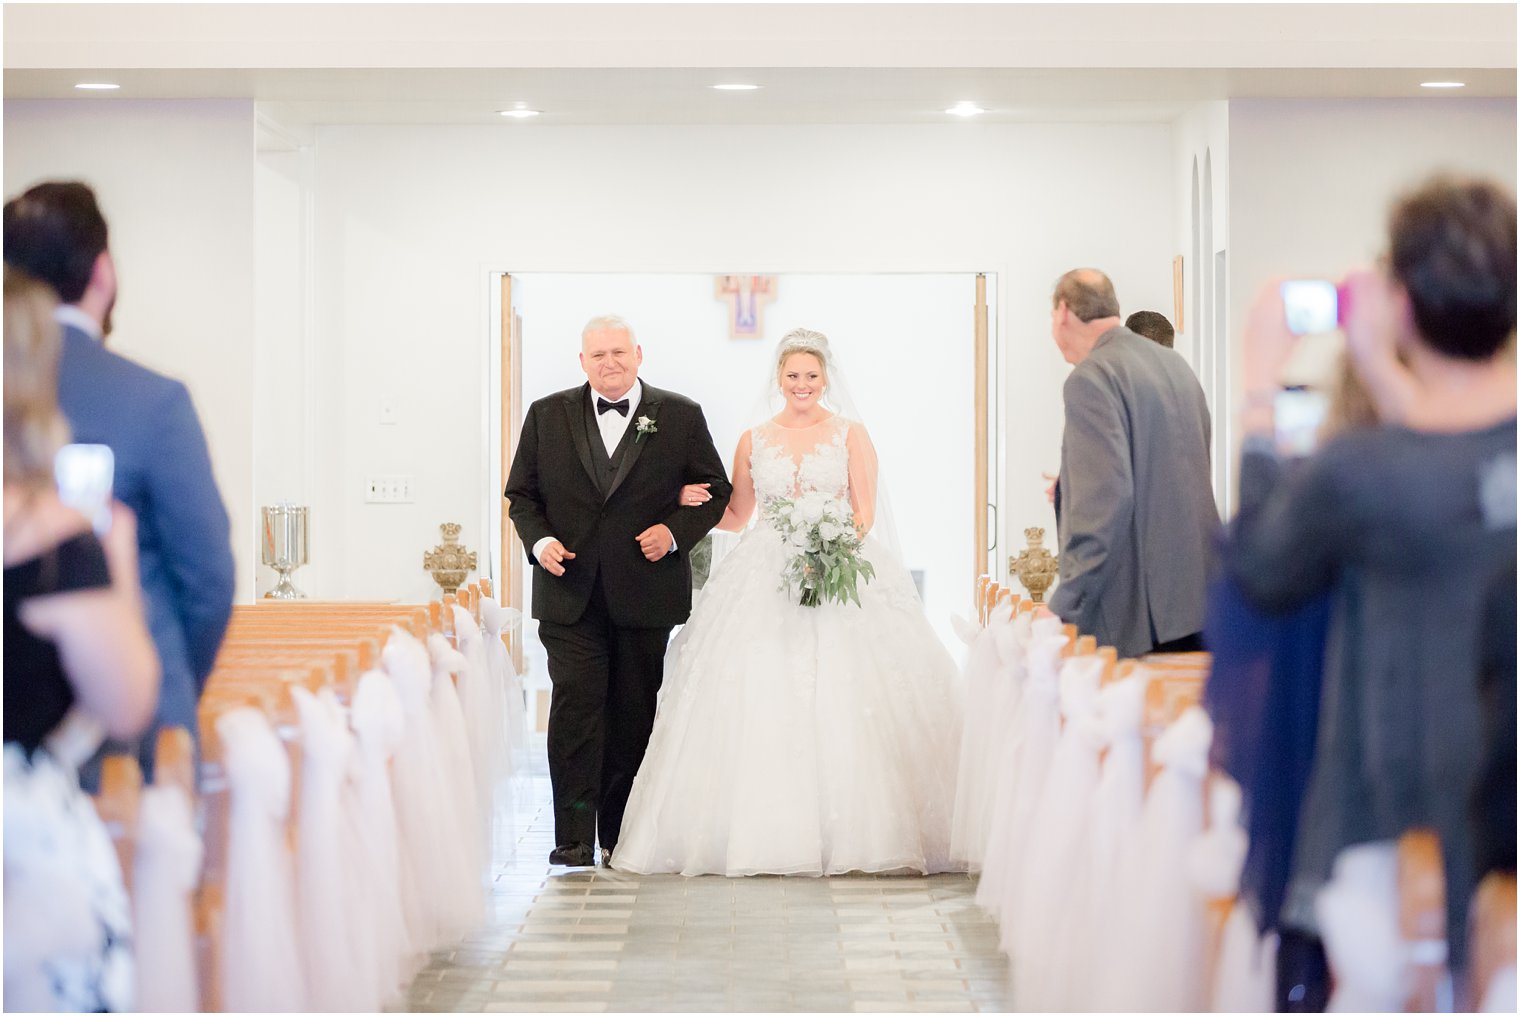 father escorts bride down aisle in North Jersey wedding ceremony 